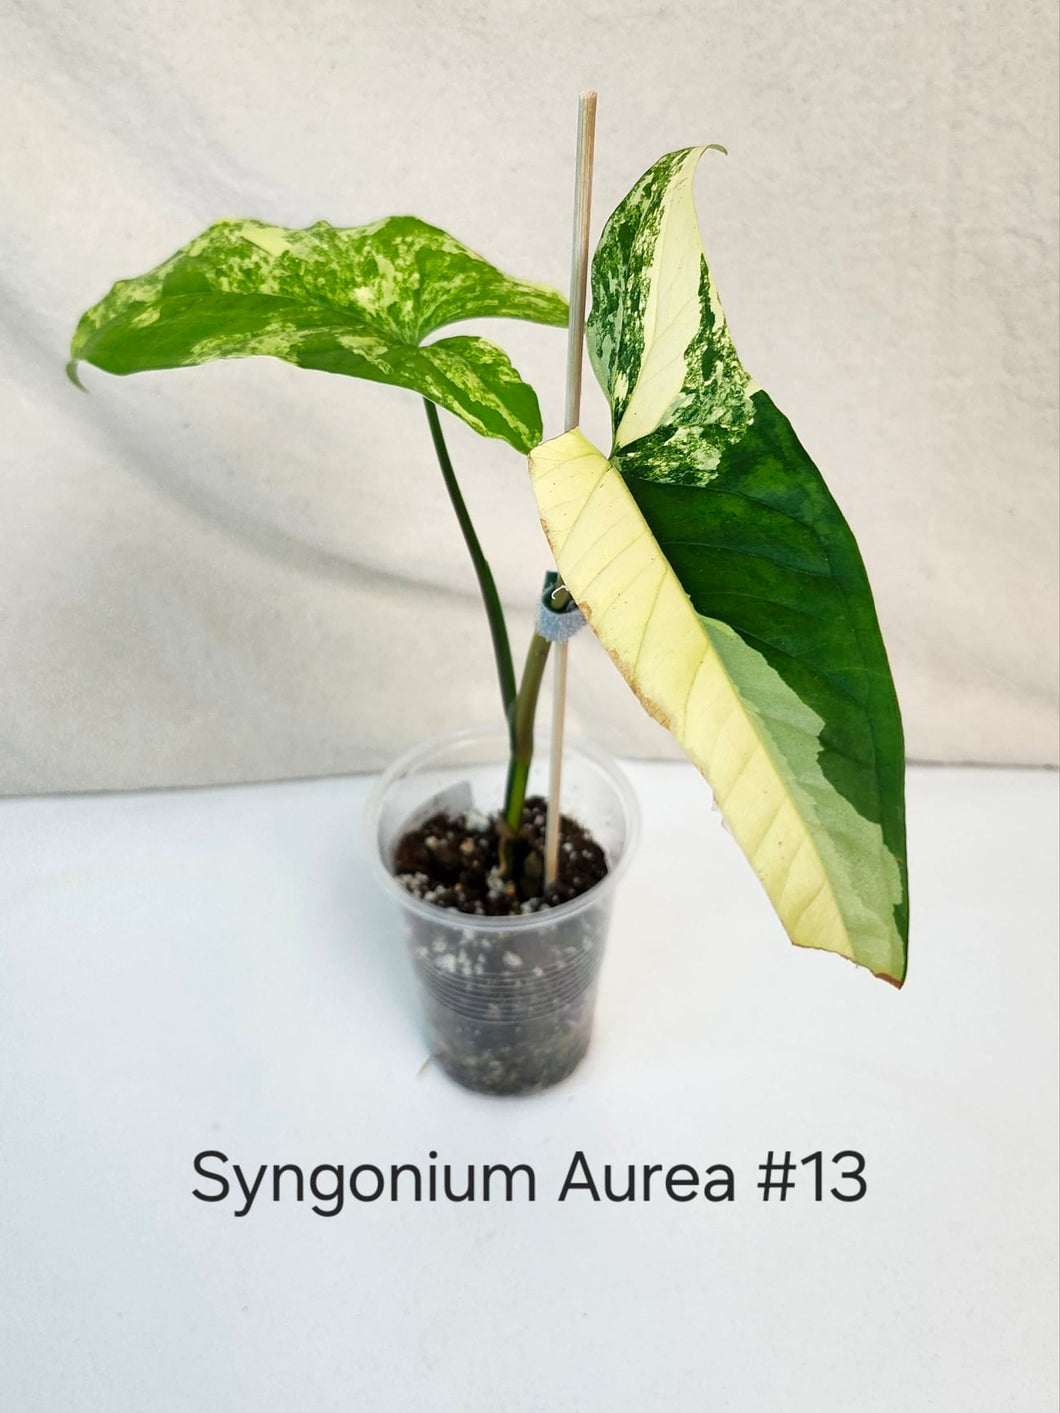 Syngonium aurea #13